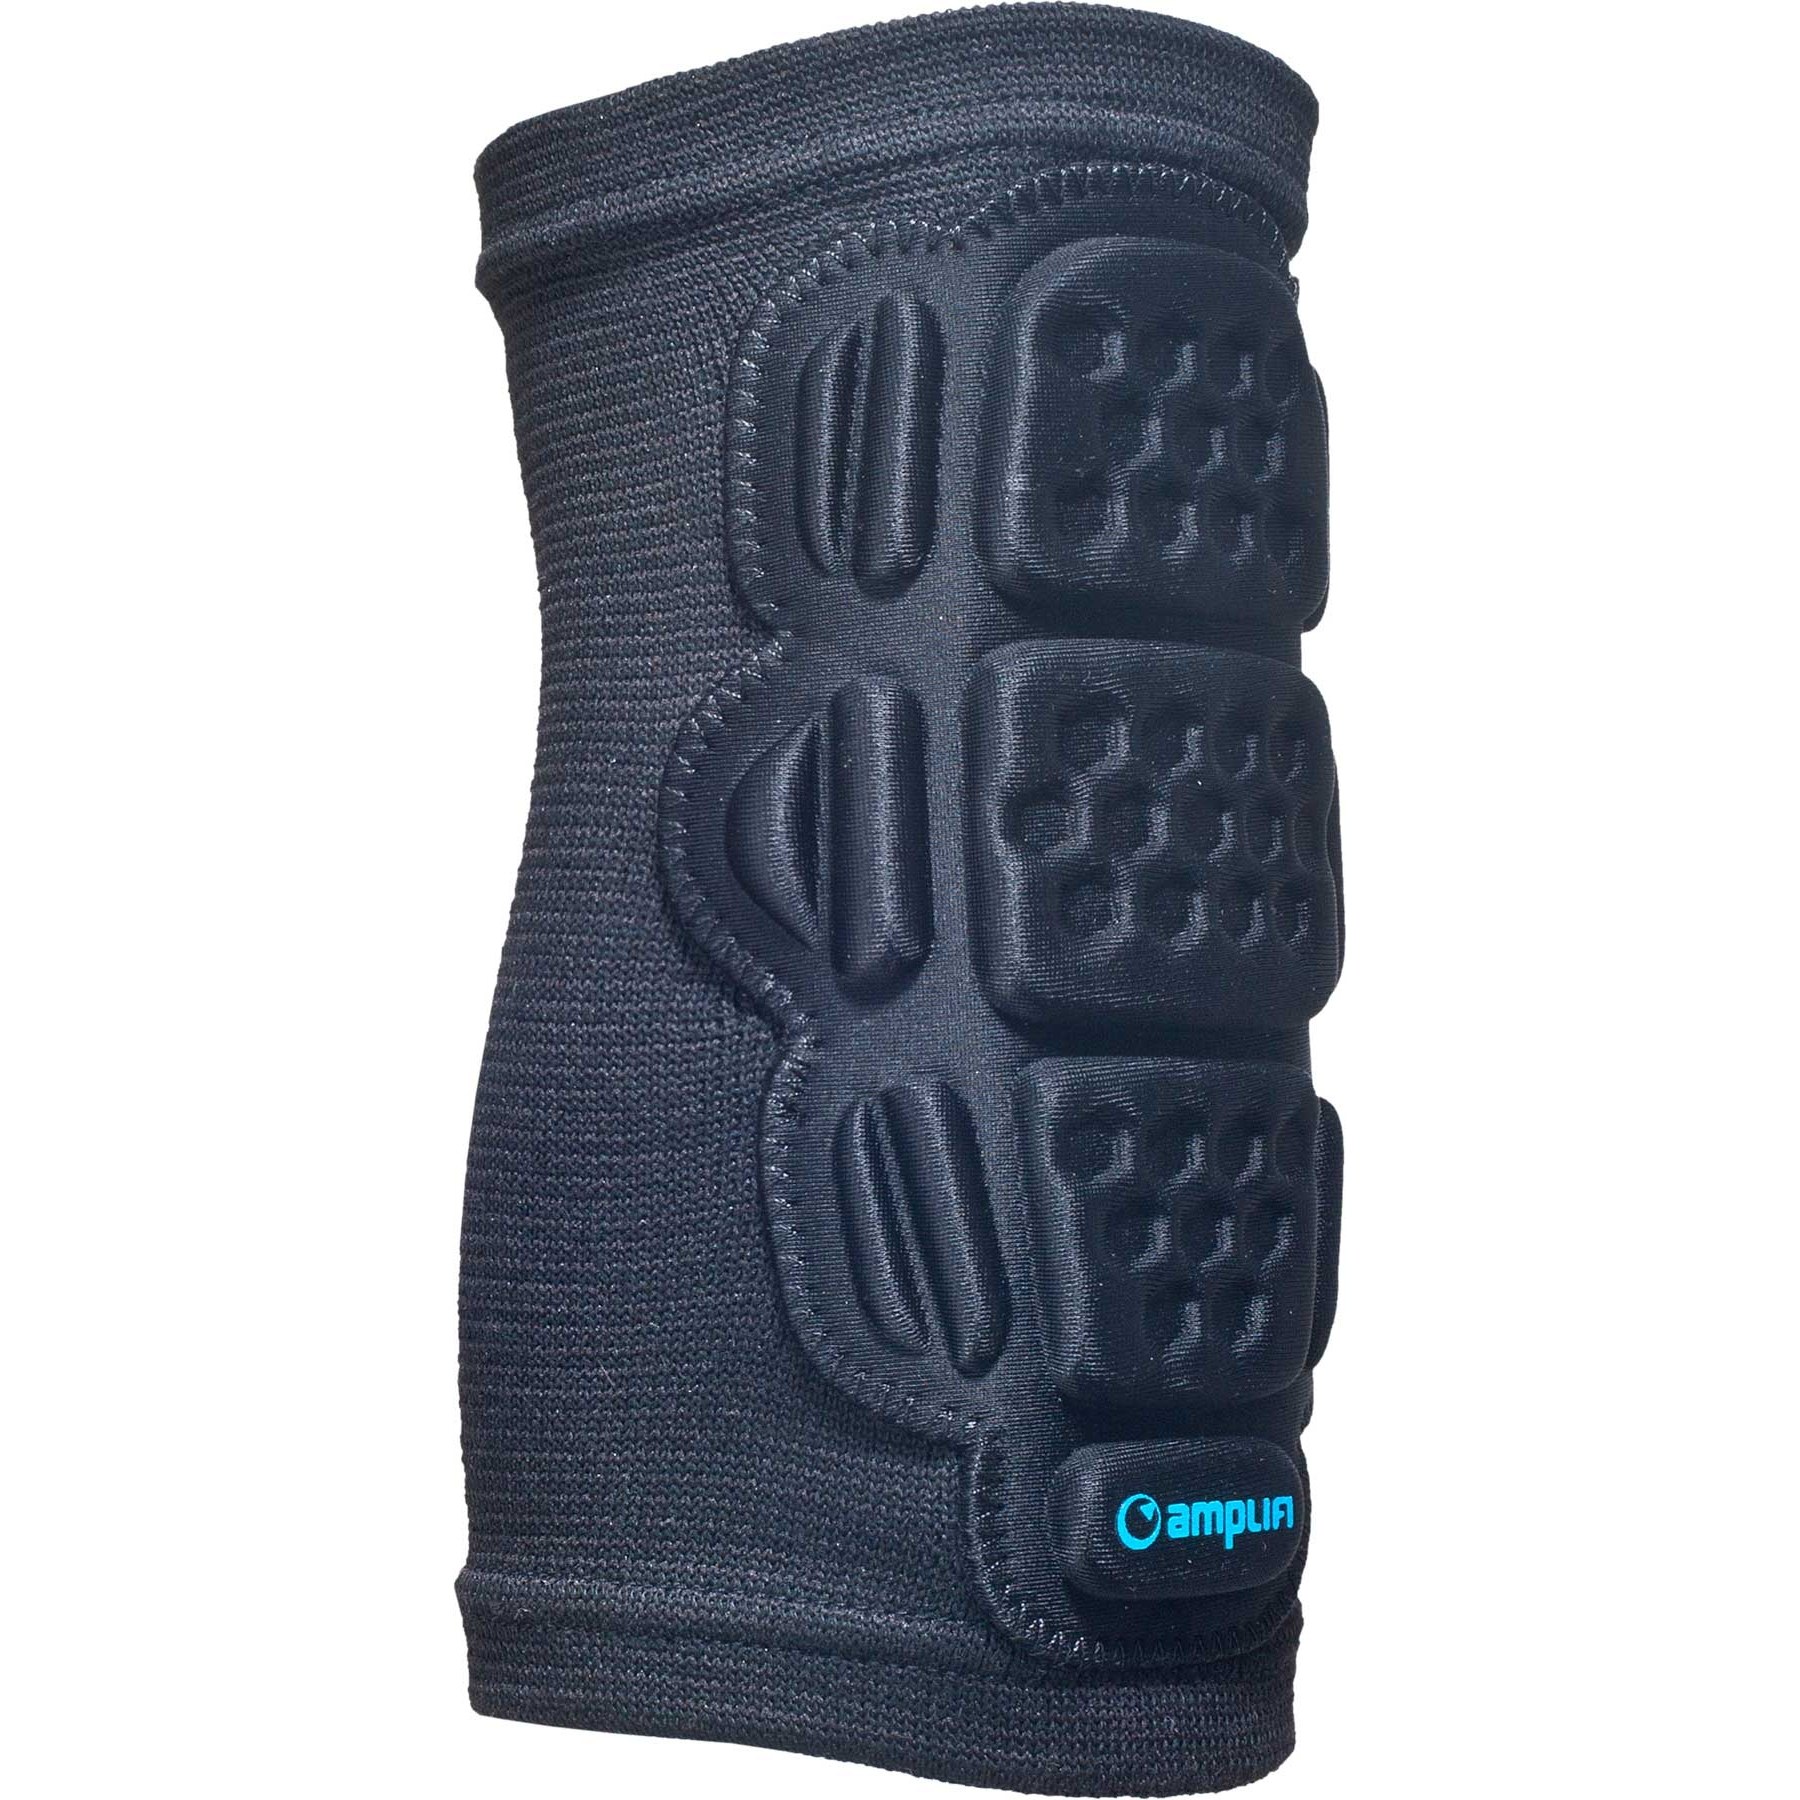 Productfoto van Amplifi Elbow Sleeve Elbow Protector - black